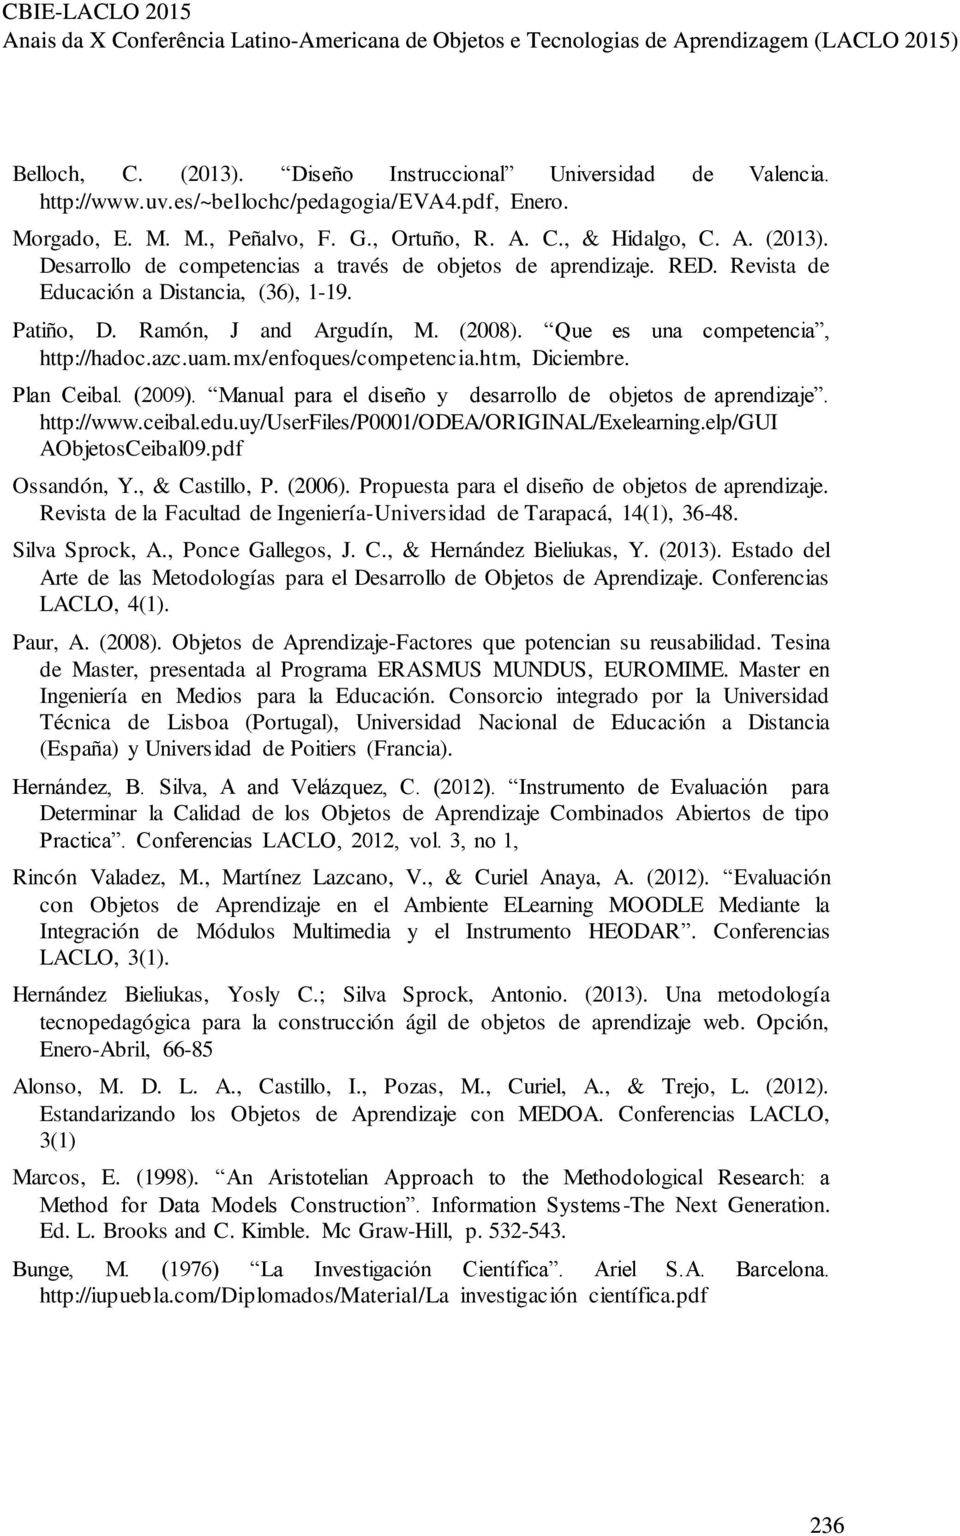 Manual para el diseño y desarrollo de objetos de aprendizaje. http://www.ceibal.edu.uy/userfiles/p0001/odea/original/exelearning.elp/gui AObjetosCeibal09.pdf Ossandón, Y., & Castillo, P. (2006).